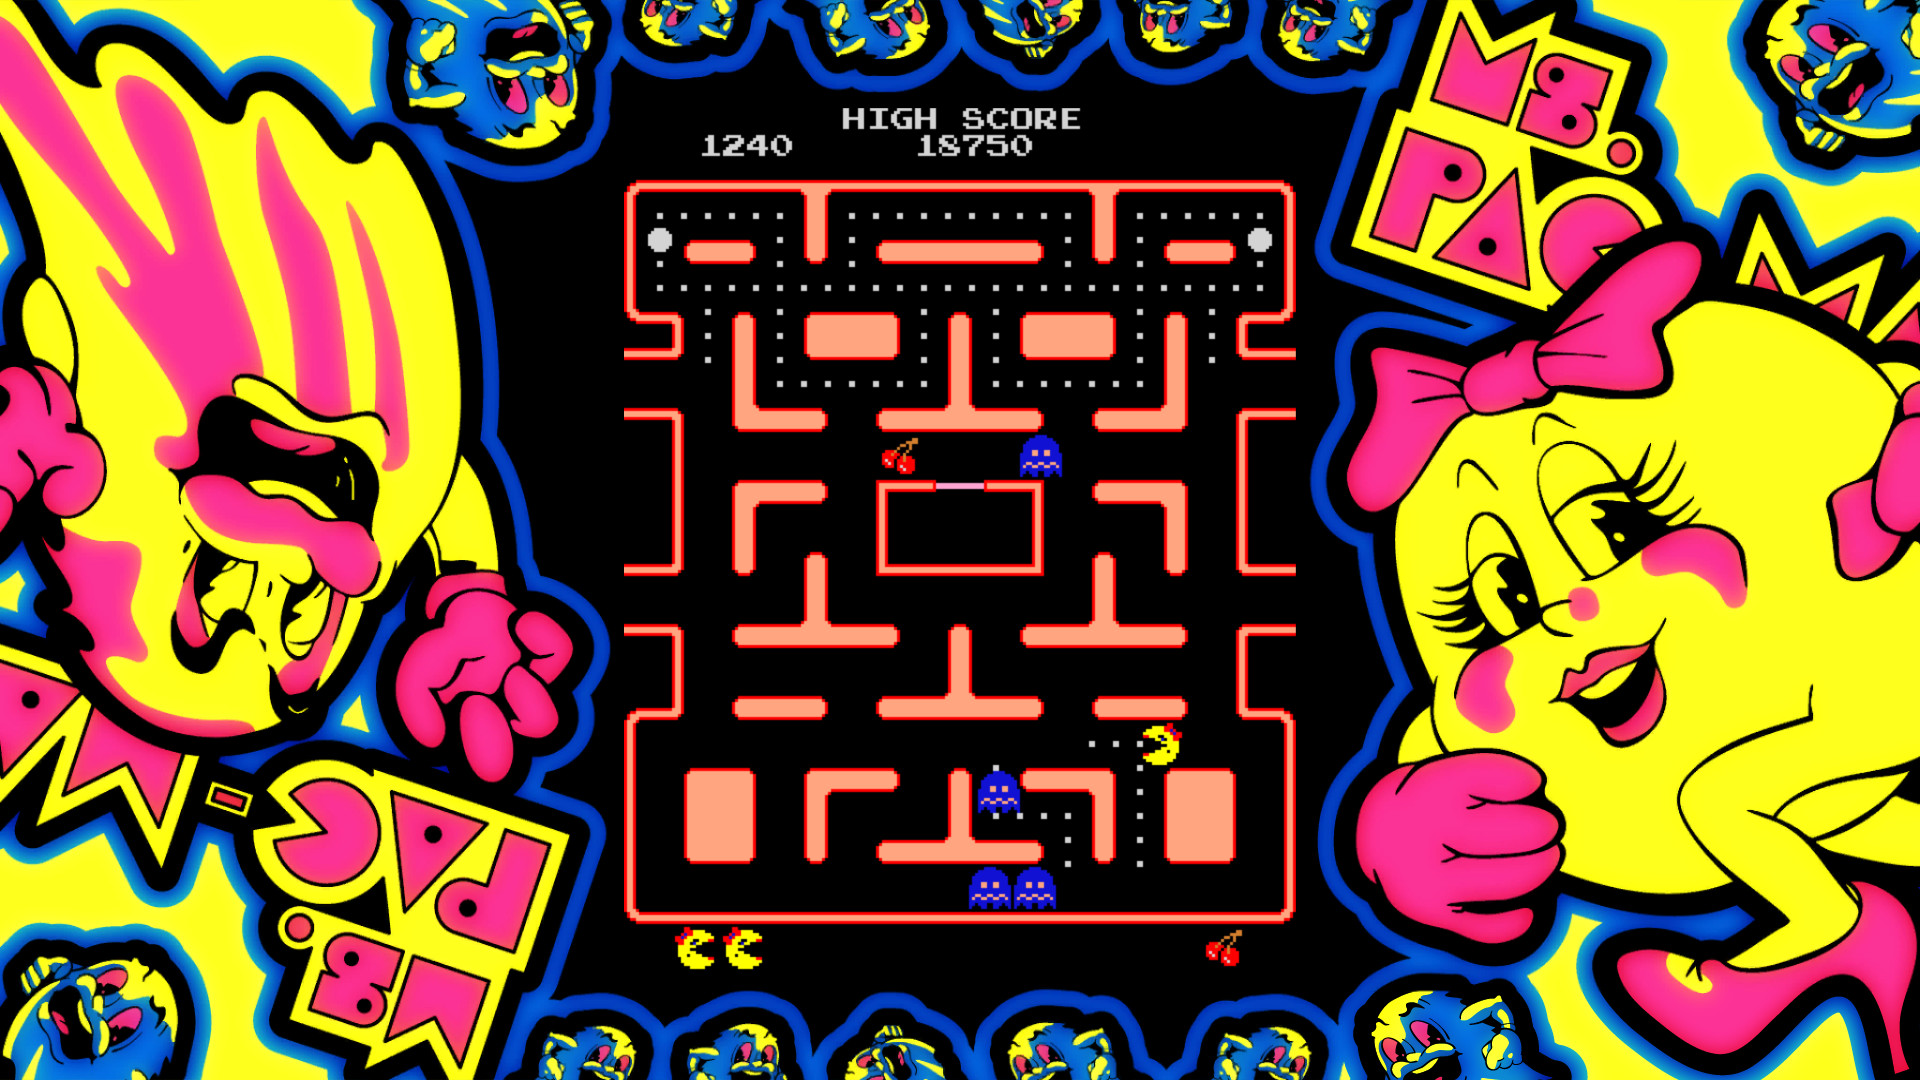 release date for original pac man arcade